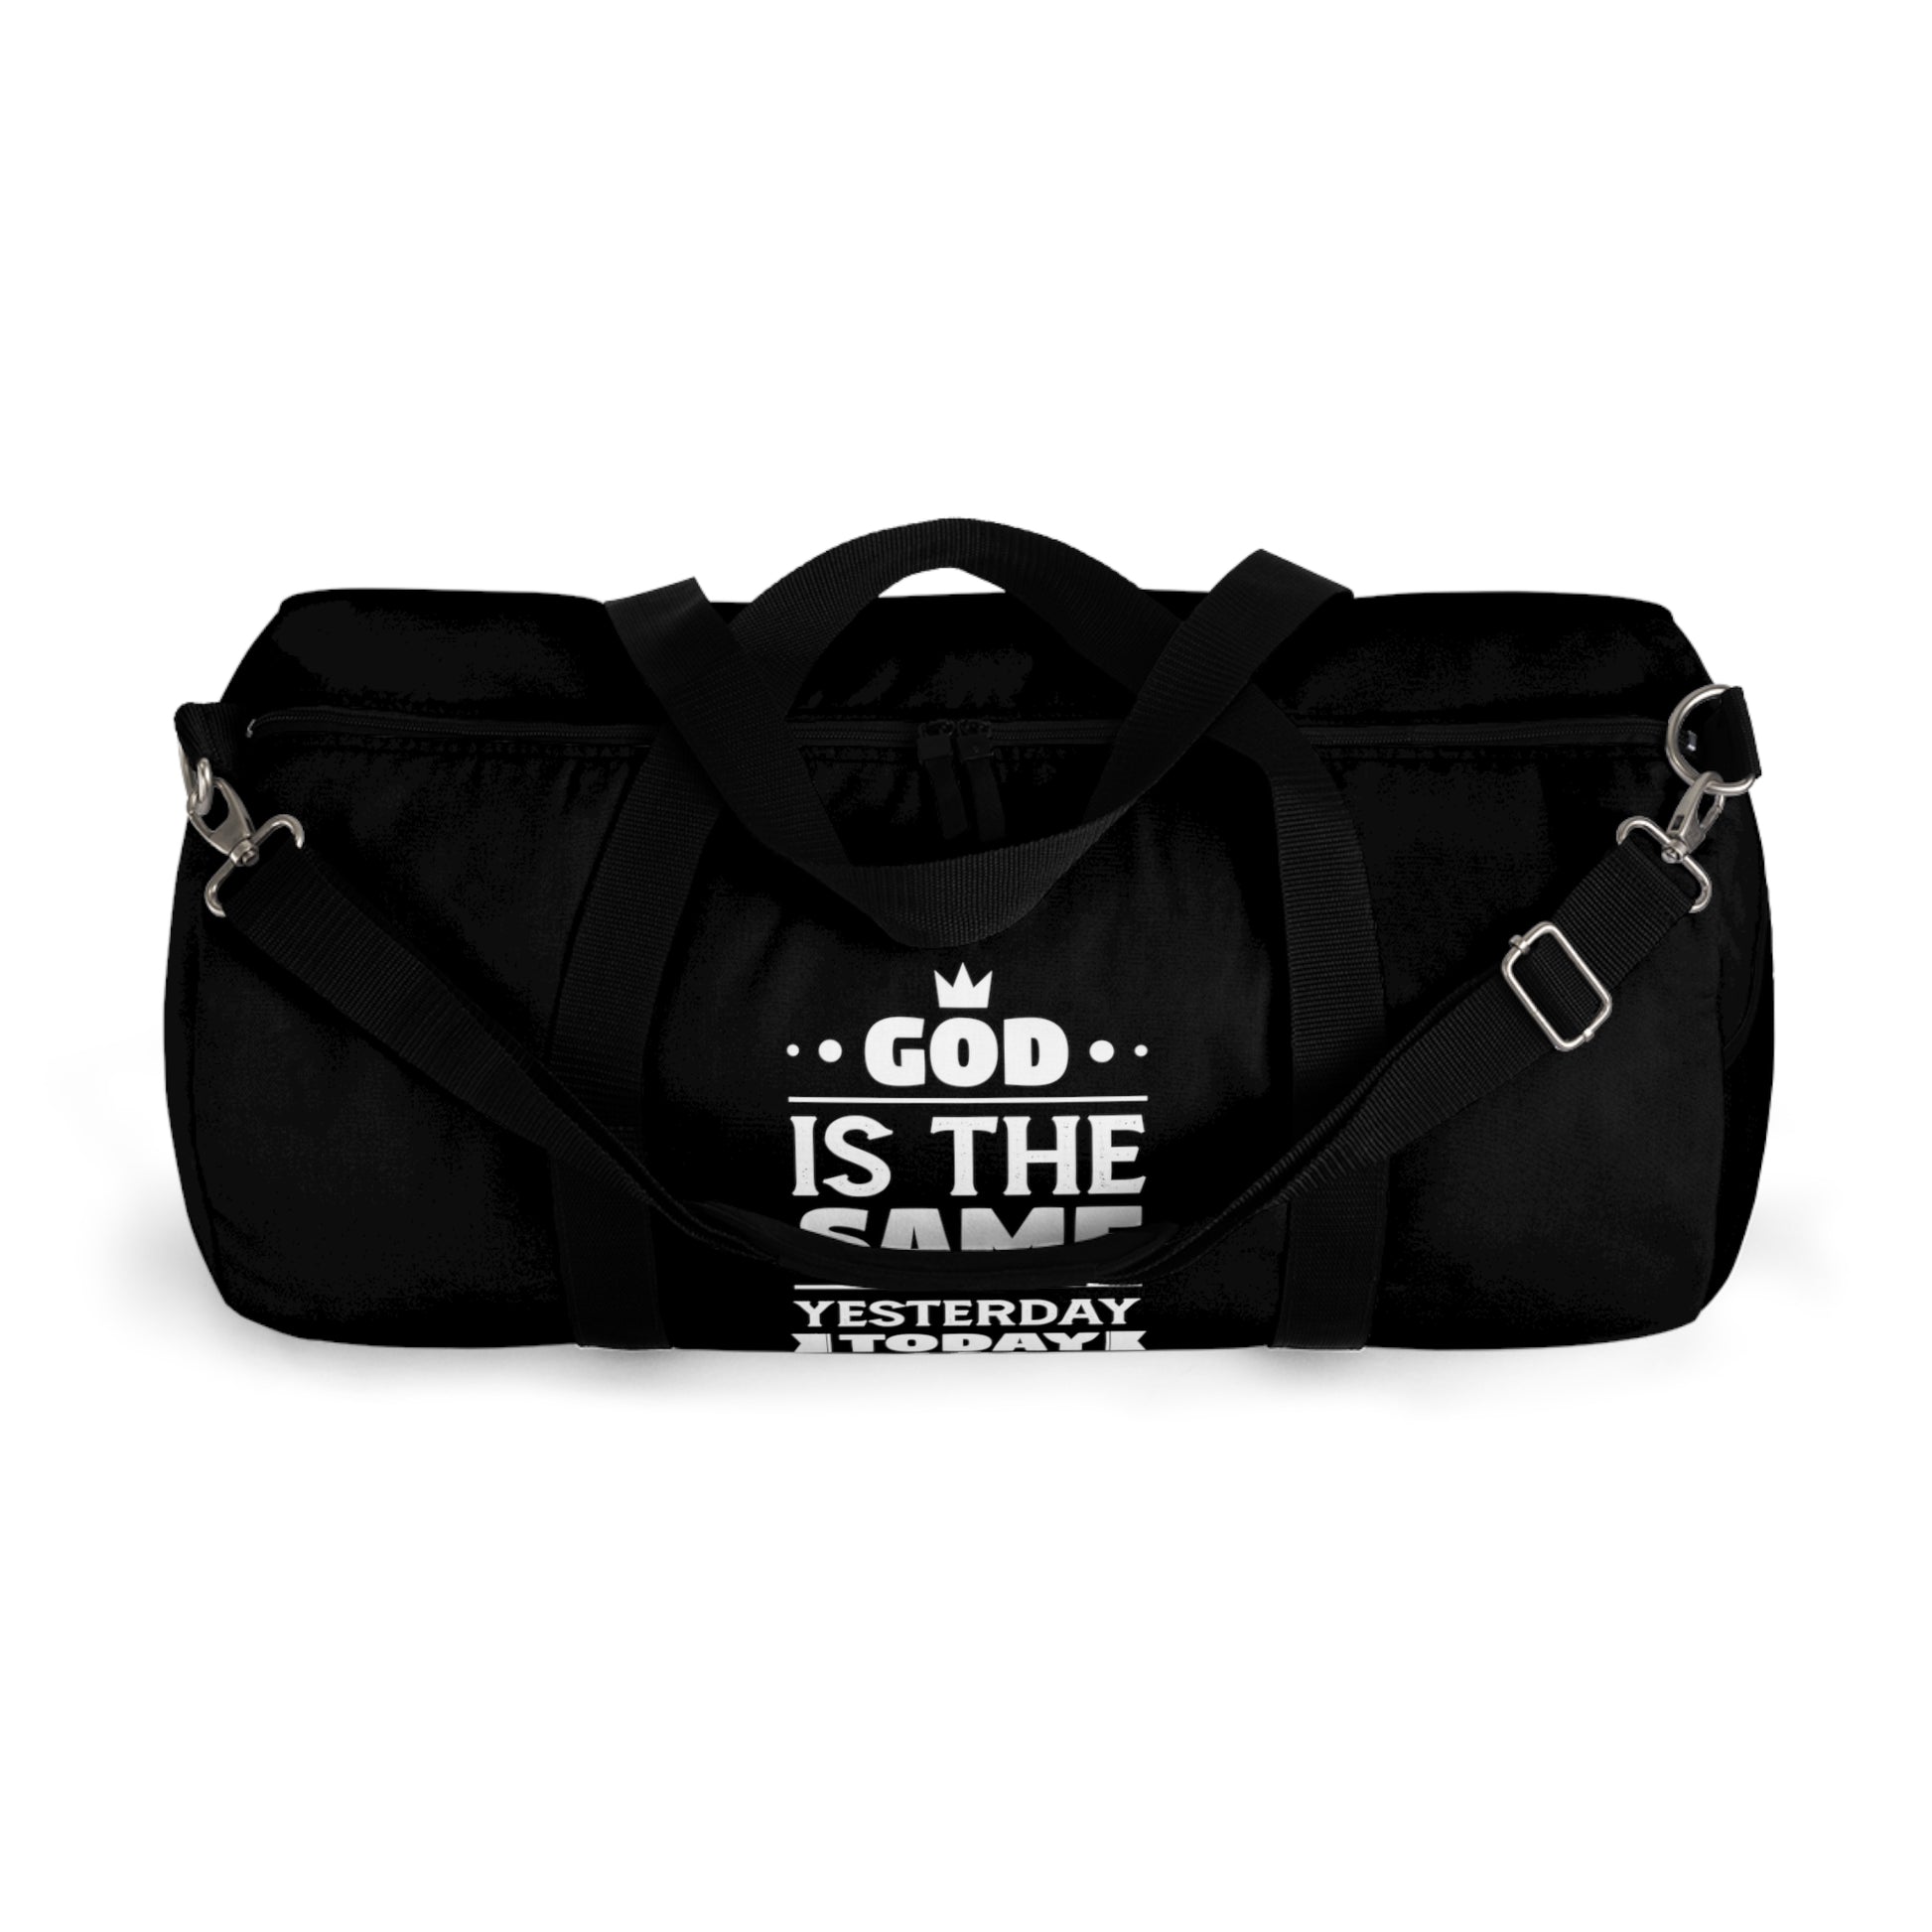 God Is The Same Yesterday Today & Tomorrow Christian Duffel Bag Printify